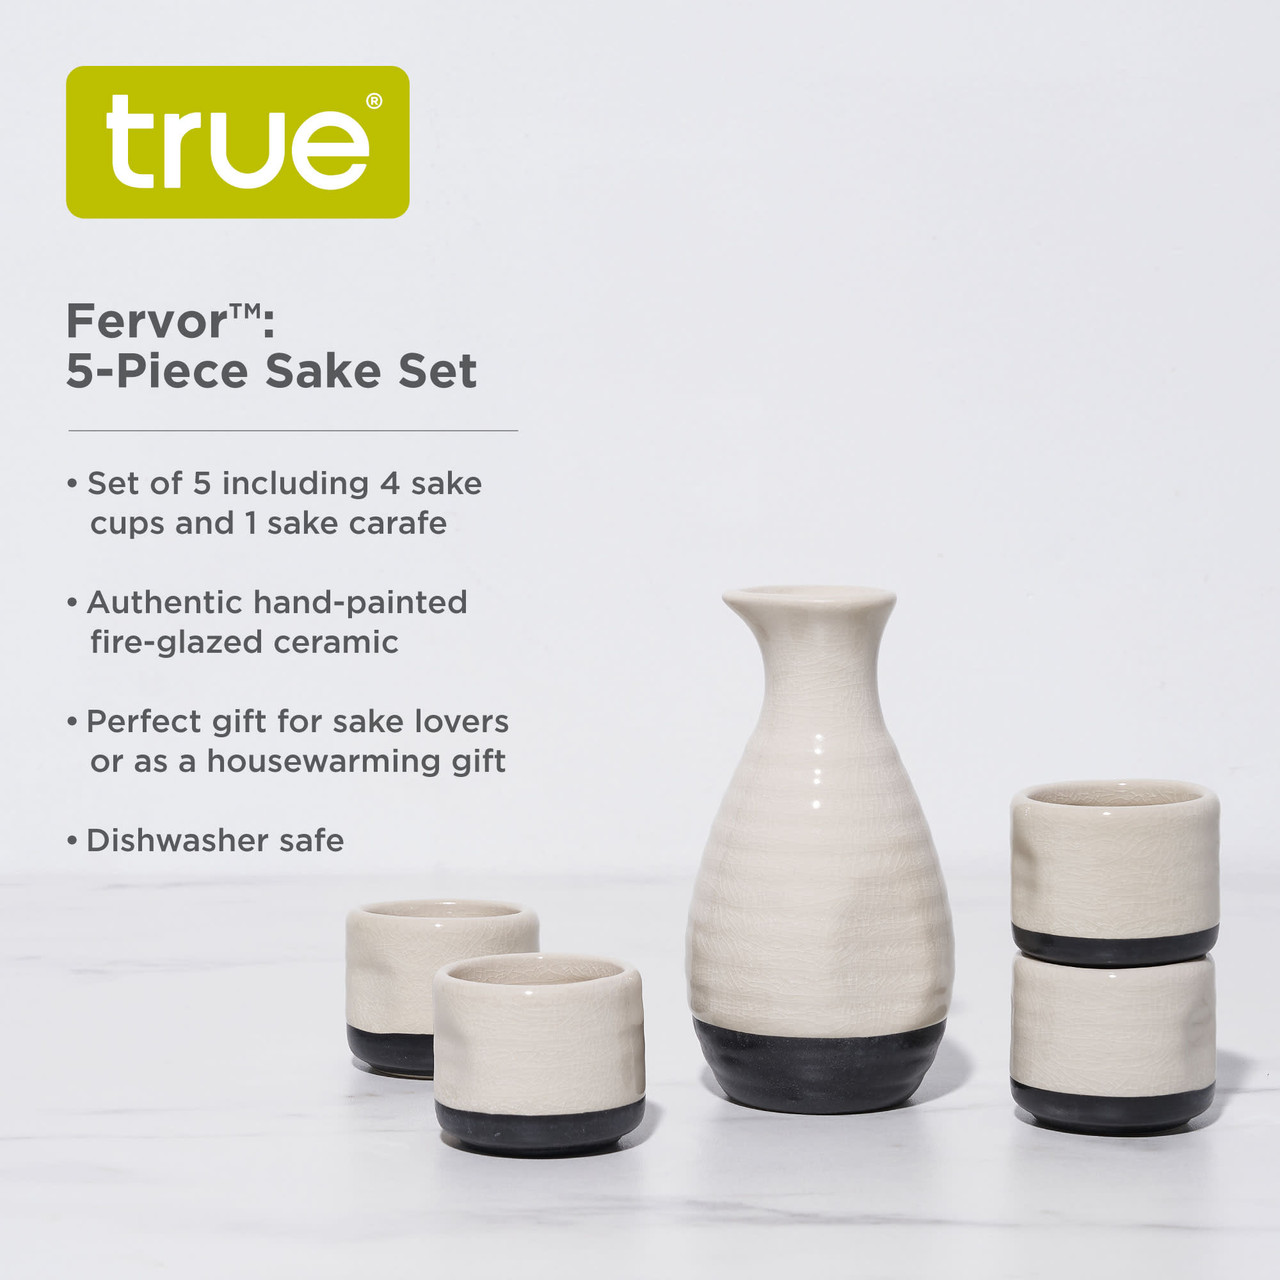 Fervor: 5-Piece Sake Set